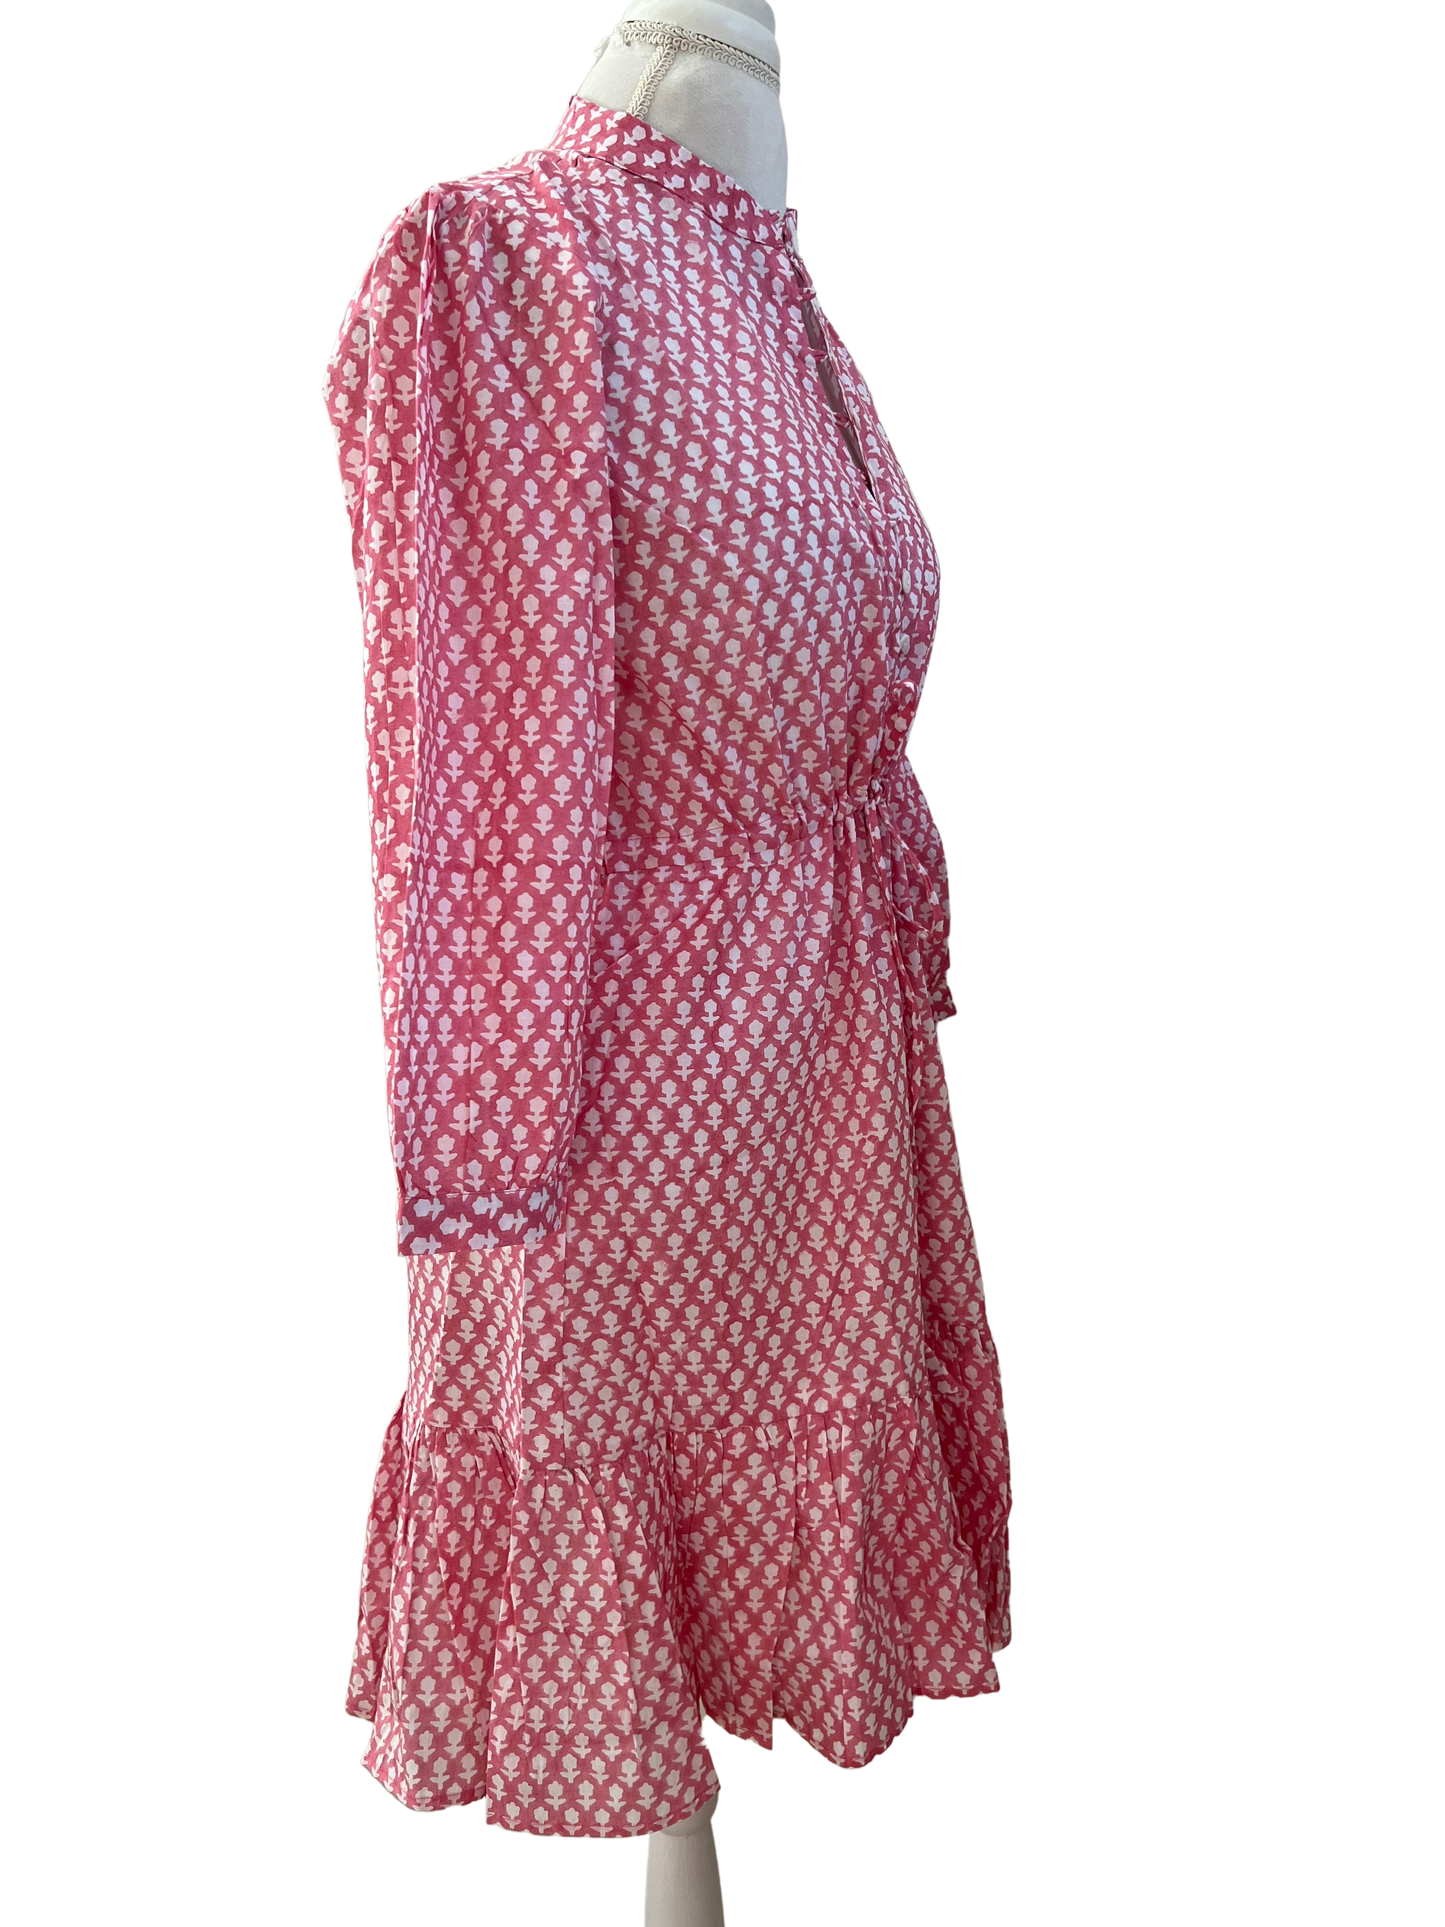 Celeste Day Dress, Geranium Pink-sample sale